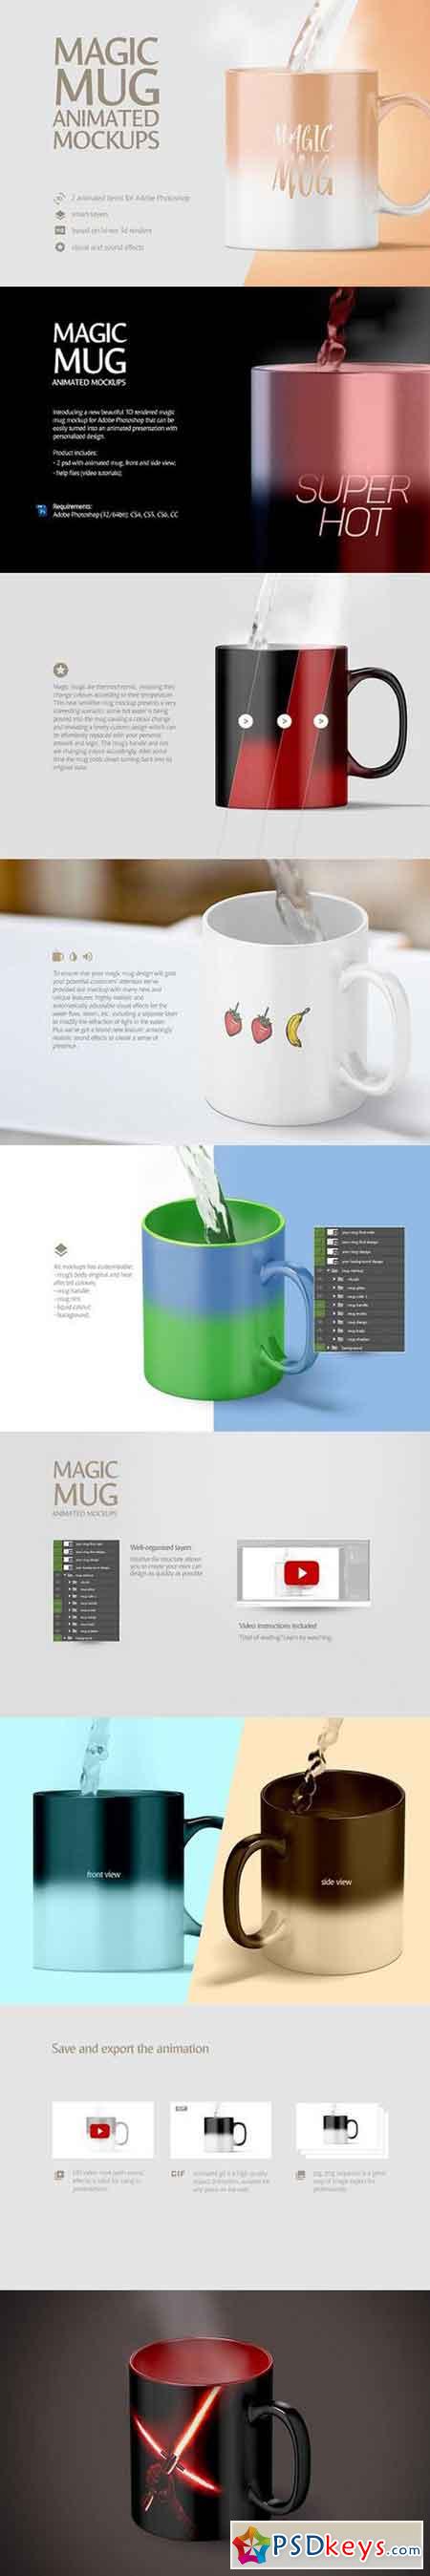 Magic Mug Animated Mockup 1494524